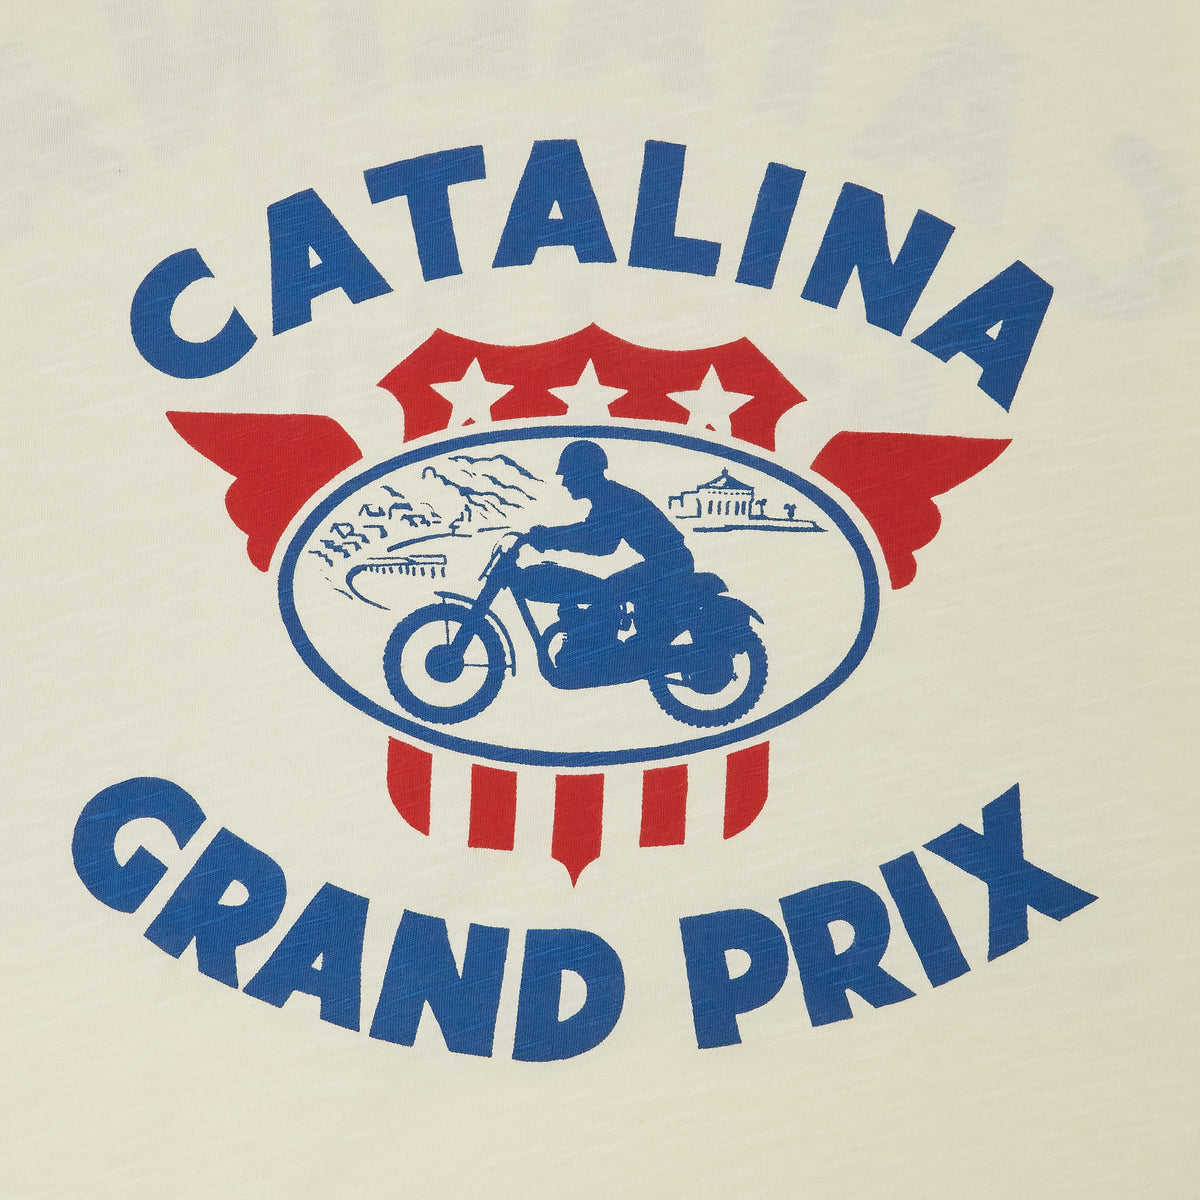 Johnson Motors Inc. Catalina Grand Prix T-Shirt